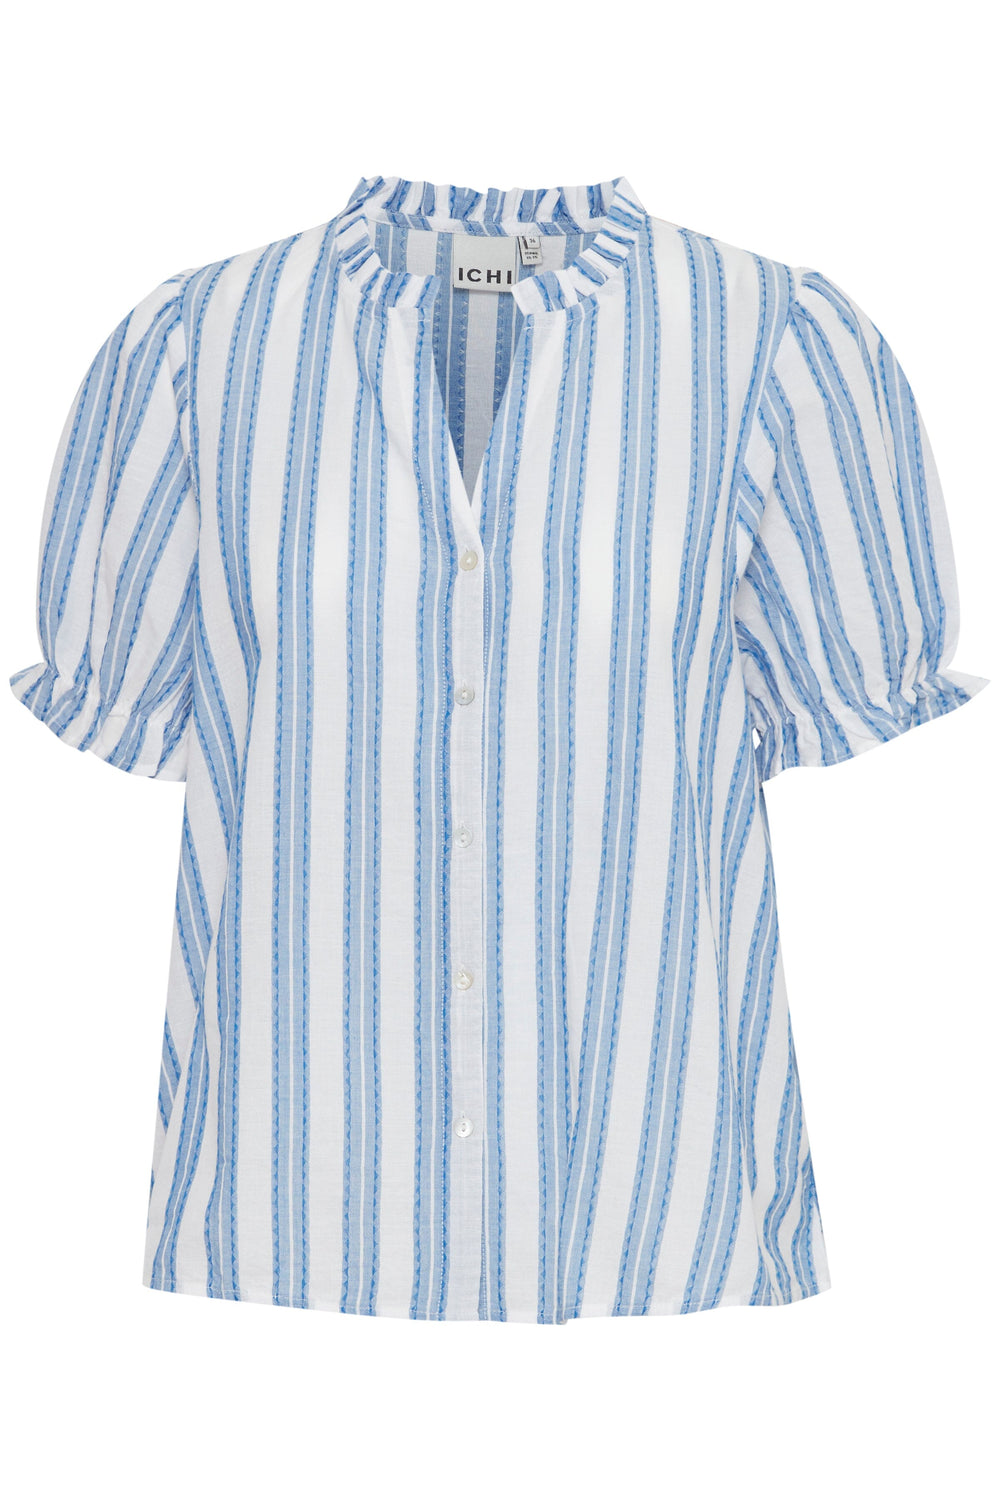 Ichi - Ihezomo Sh2 - 201563 Palace Blue Stripe Skjorter 